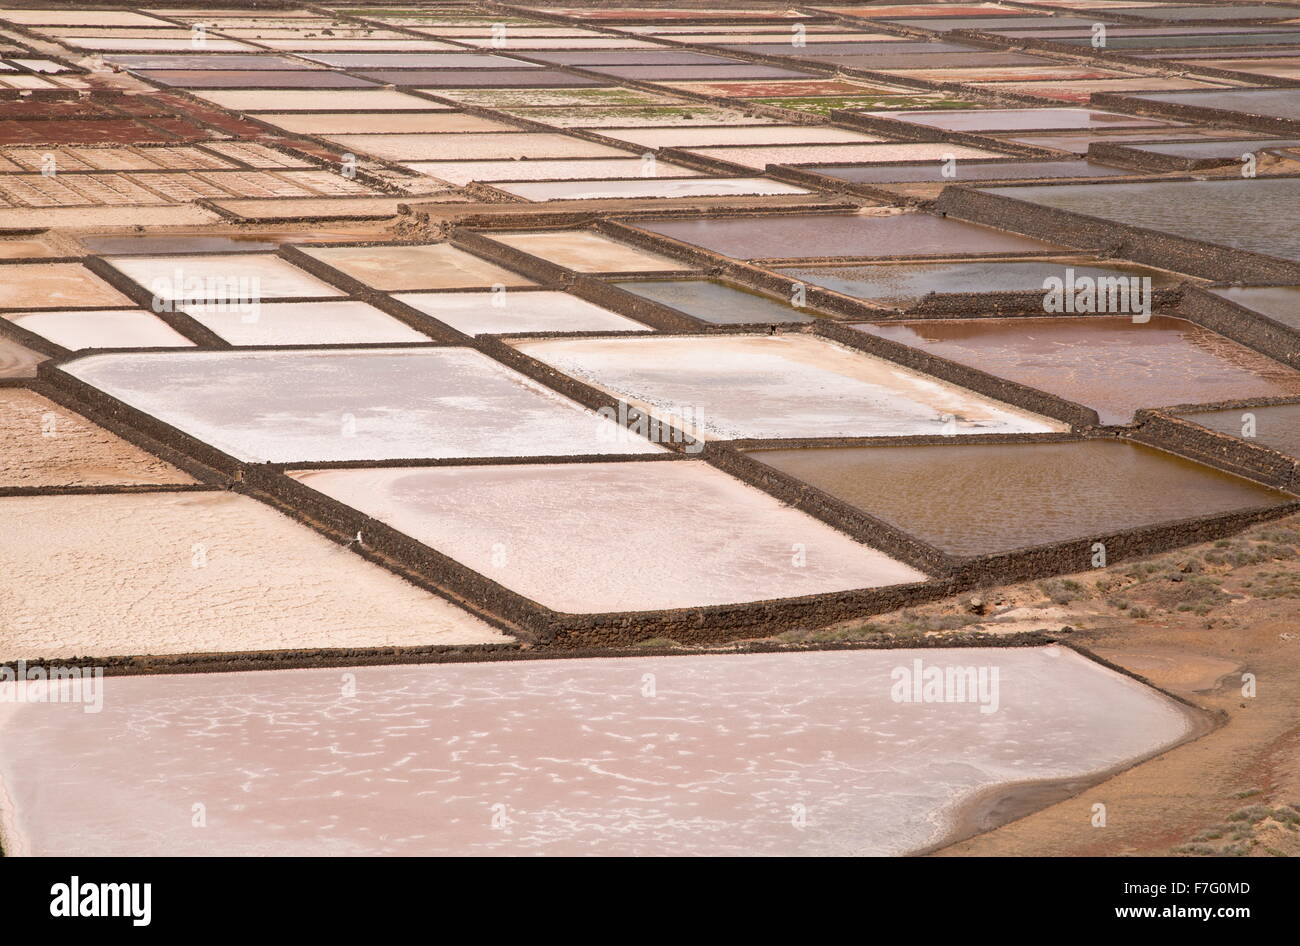 Active saltpans, or Salt evaporation ponds, at Salinas de Janubio, Lanzarote. Stock Photo